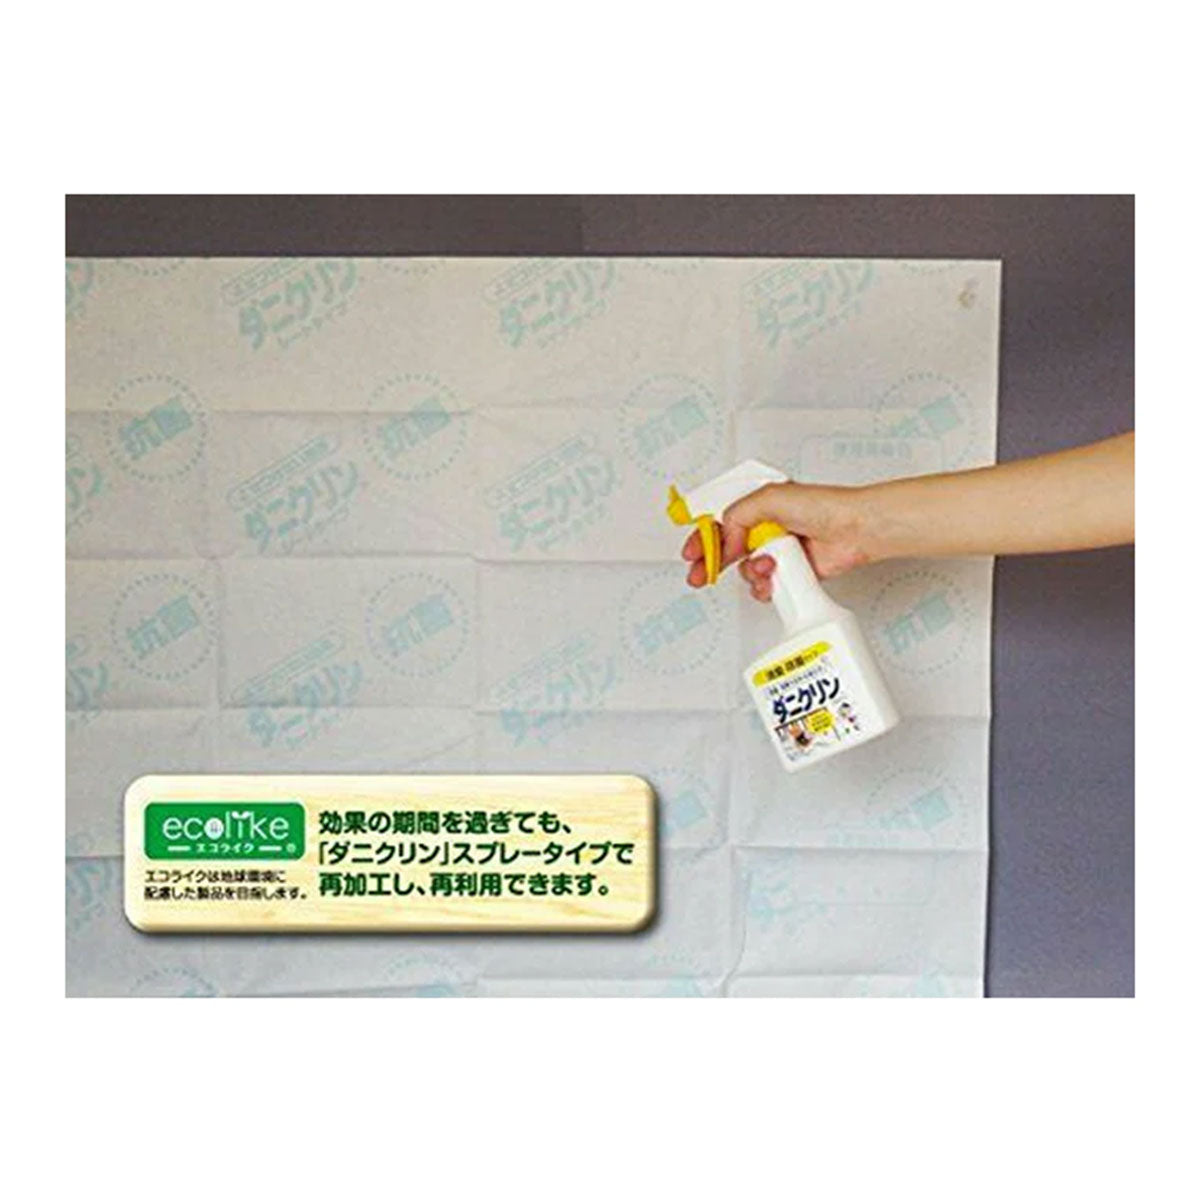 Special Effect Dust Mite Pad  Antibacterial Low Odor Type 3pcs